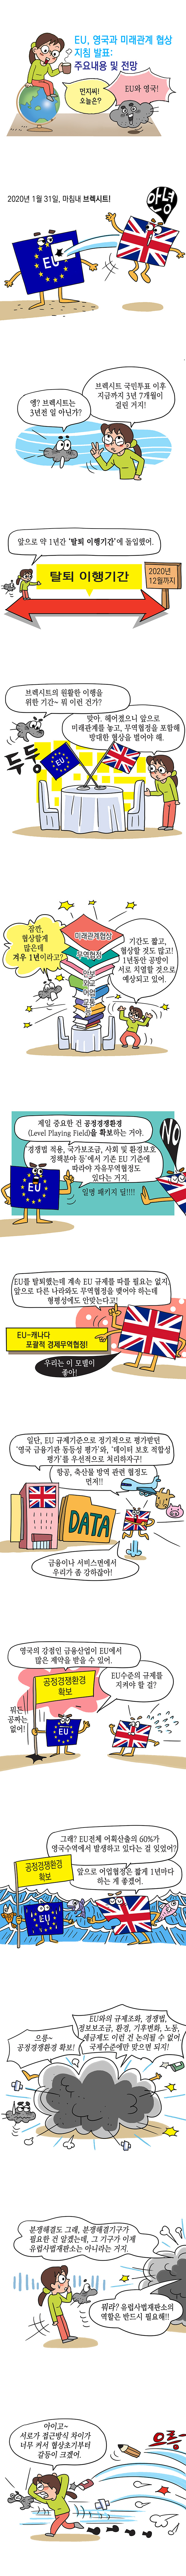 EU, 영국과 미래관계 협상 지침 발표: 주요내용 및 전망 사진1